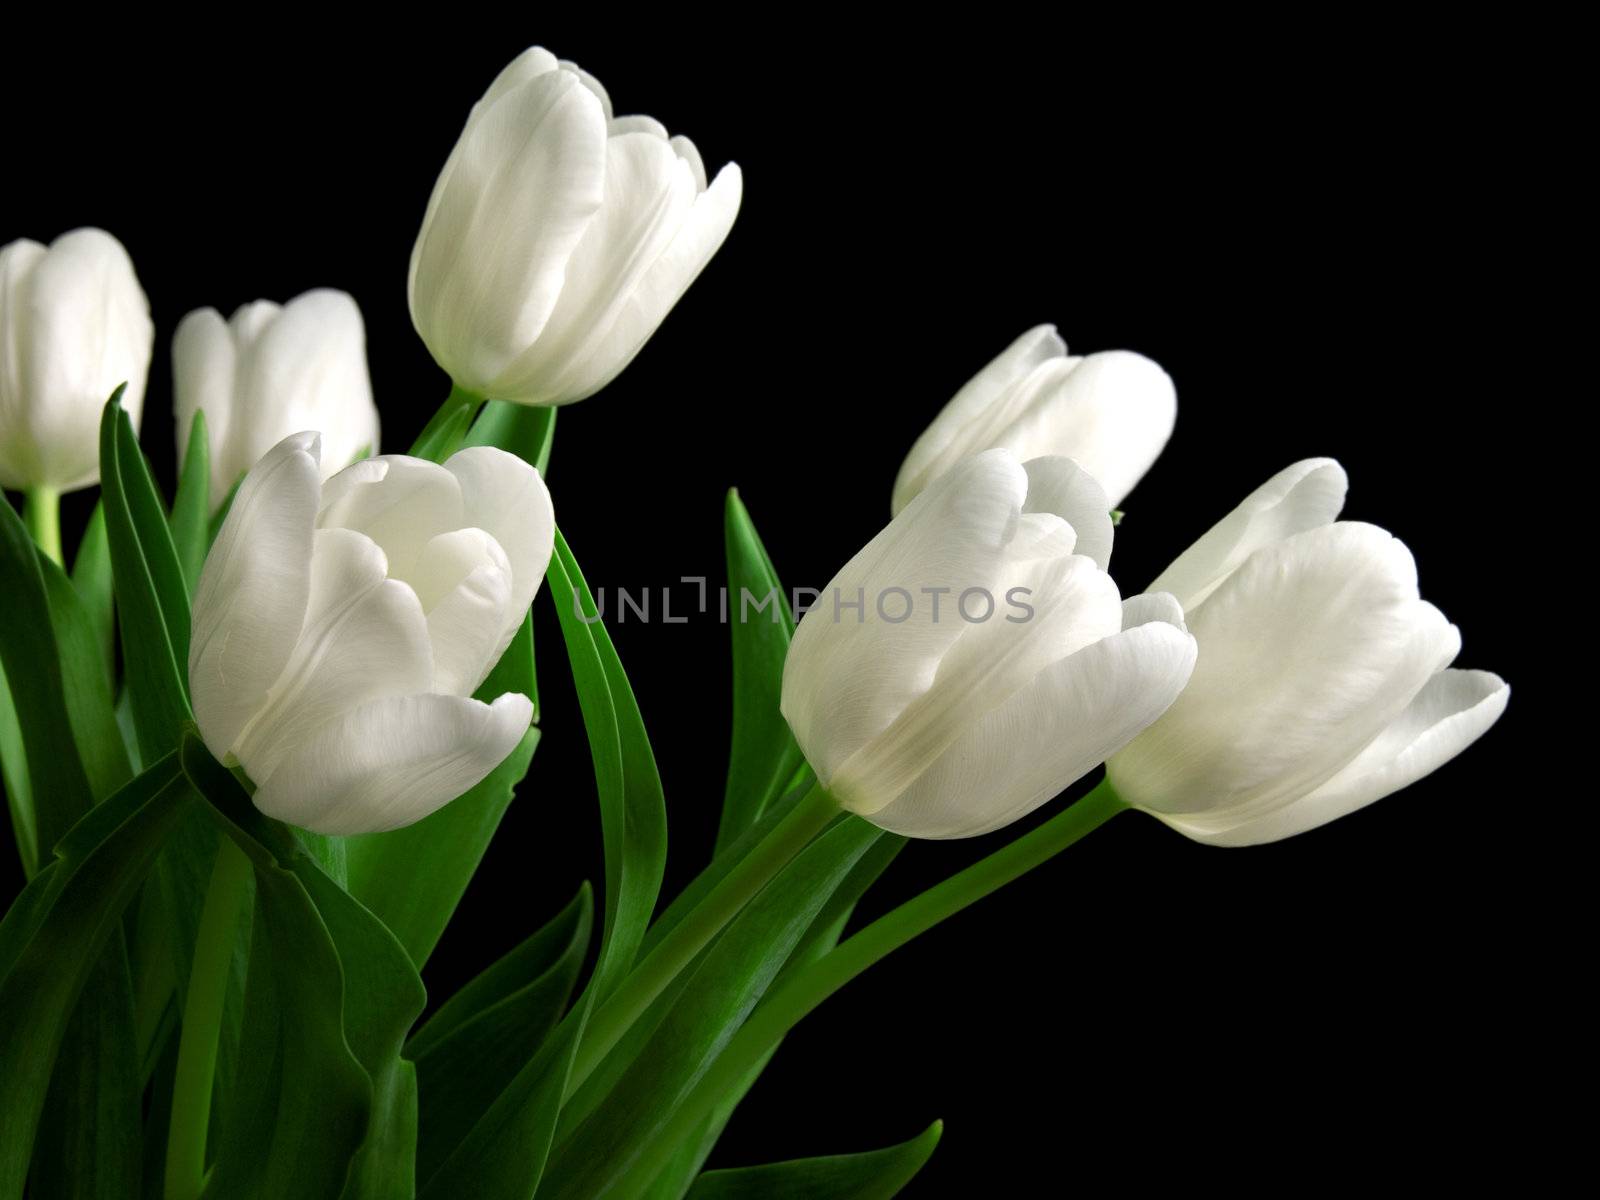 white tulips on black background by motorolka